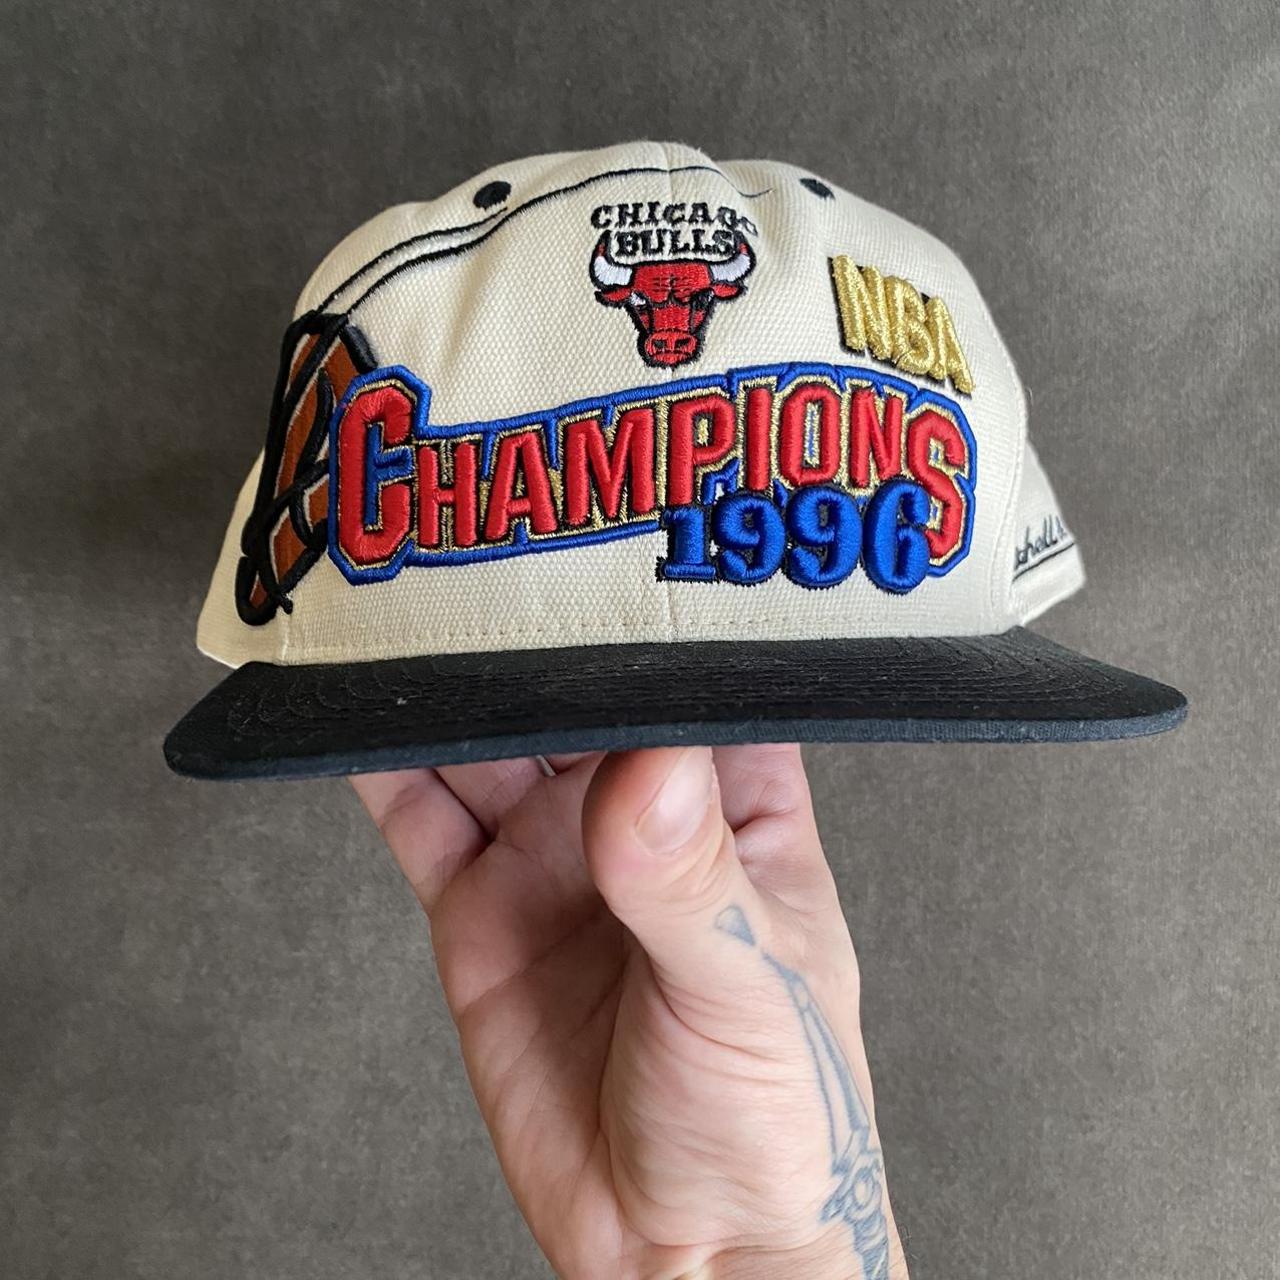 MITCHELL & NESS CHICAGO BULLS (1996 NBA CHAMPIONS) BLACK SNAPBACK